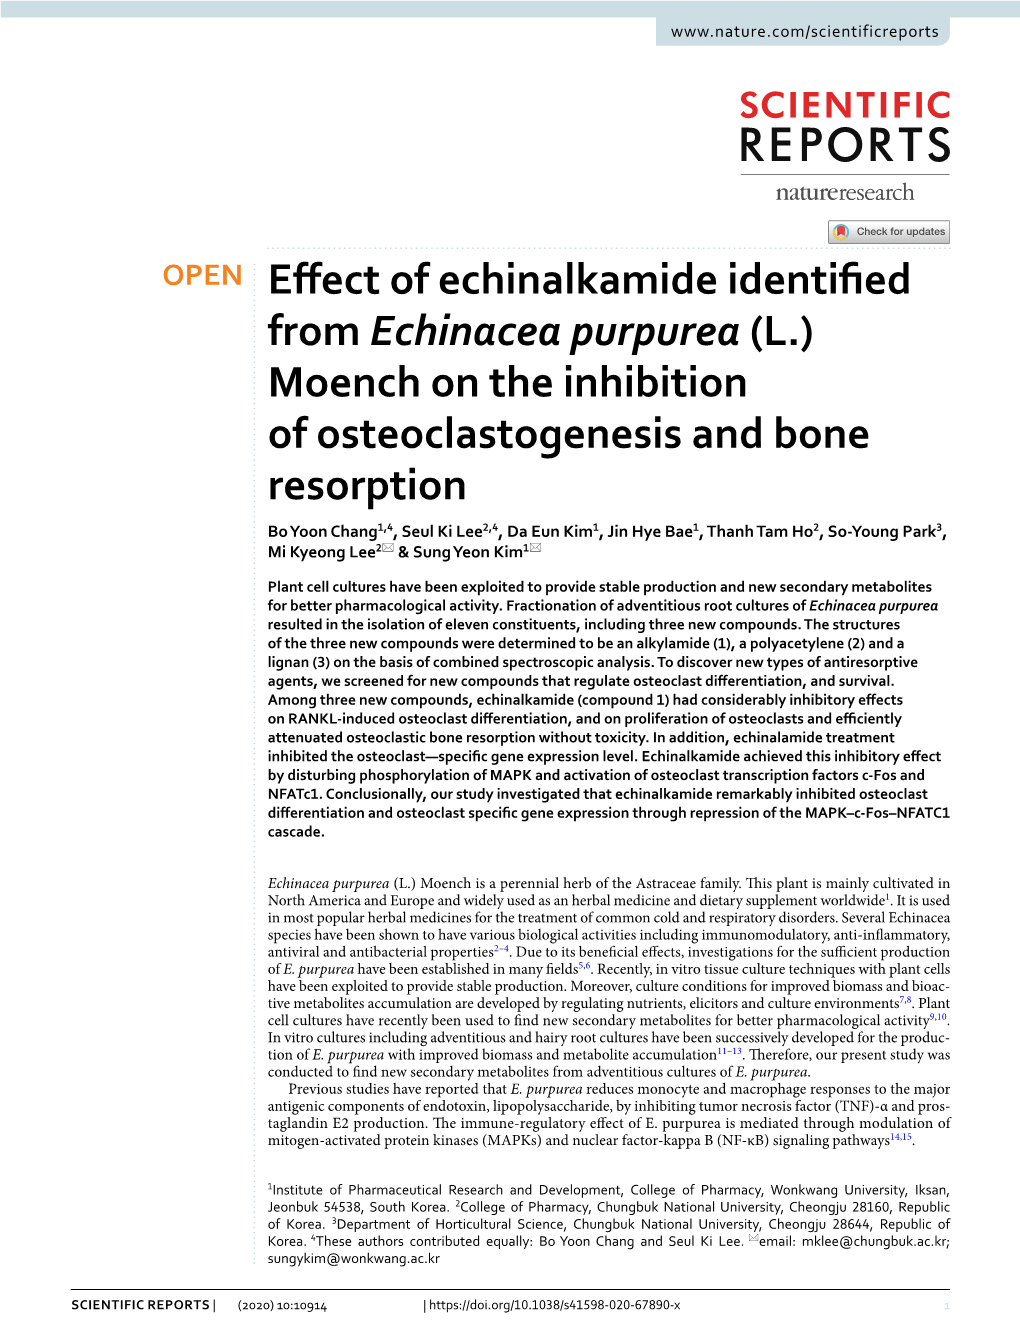 Effect of Echinalkamide Identified from Echinacea Purpurea (L.)